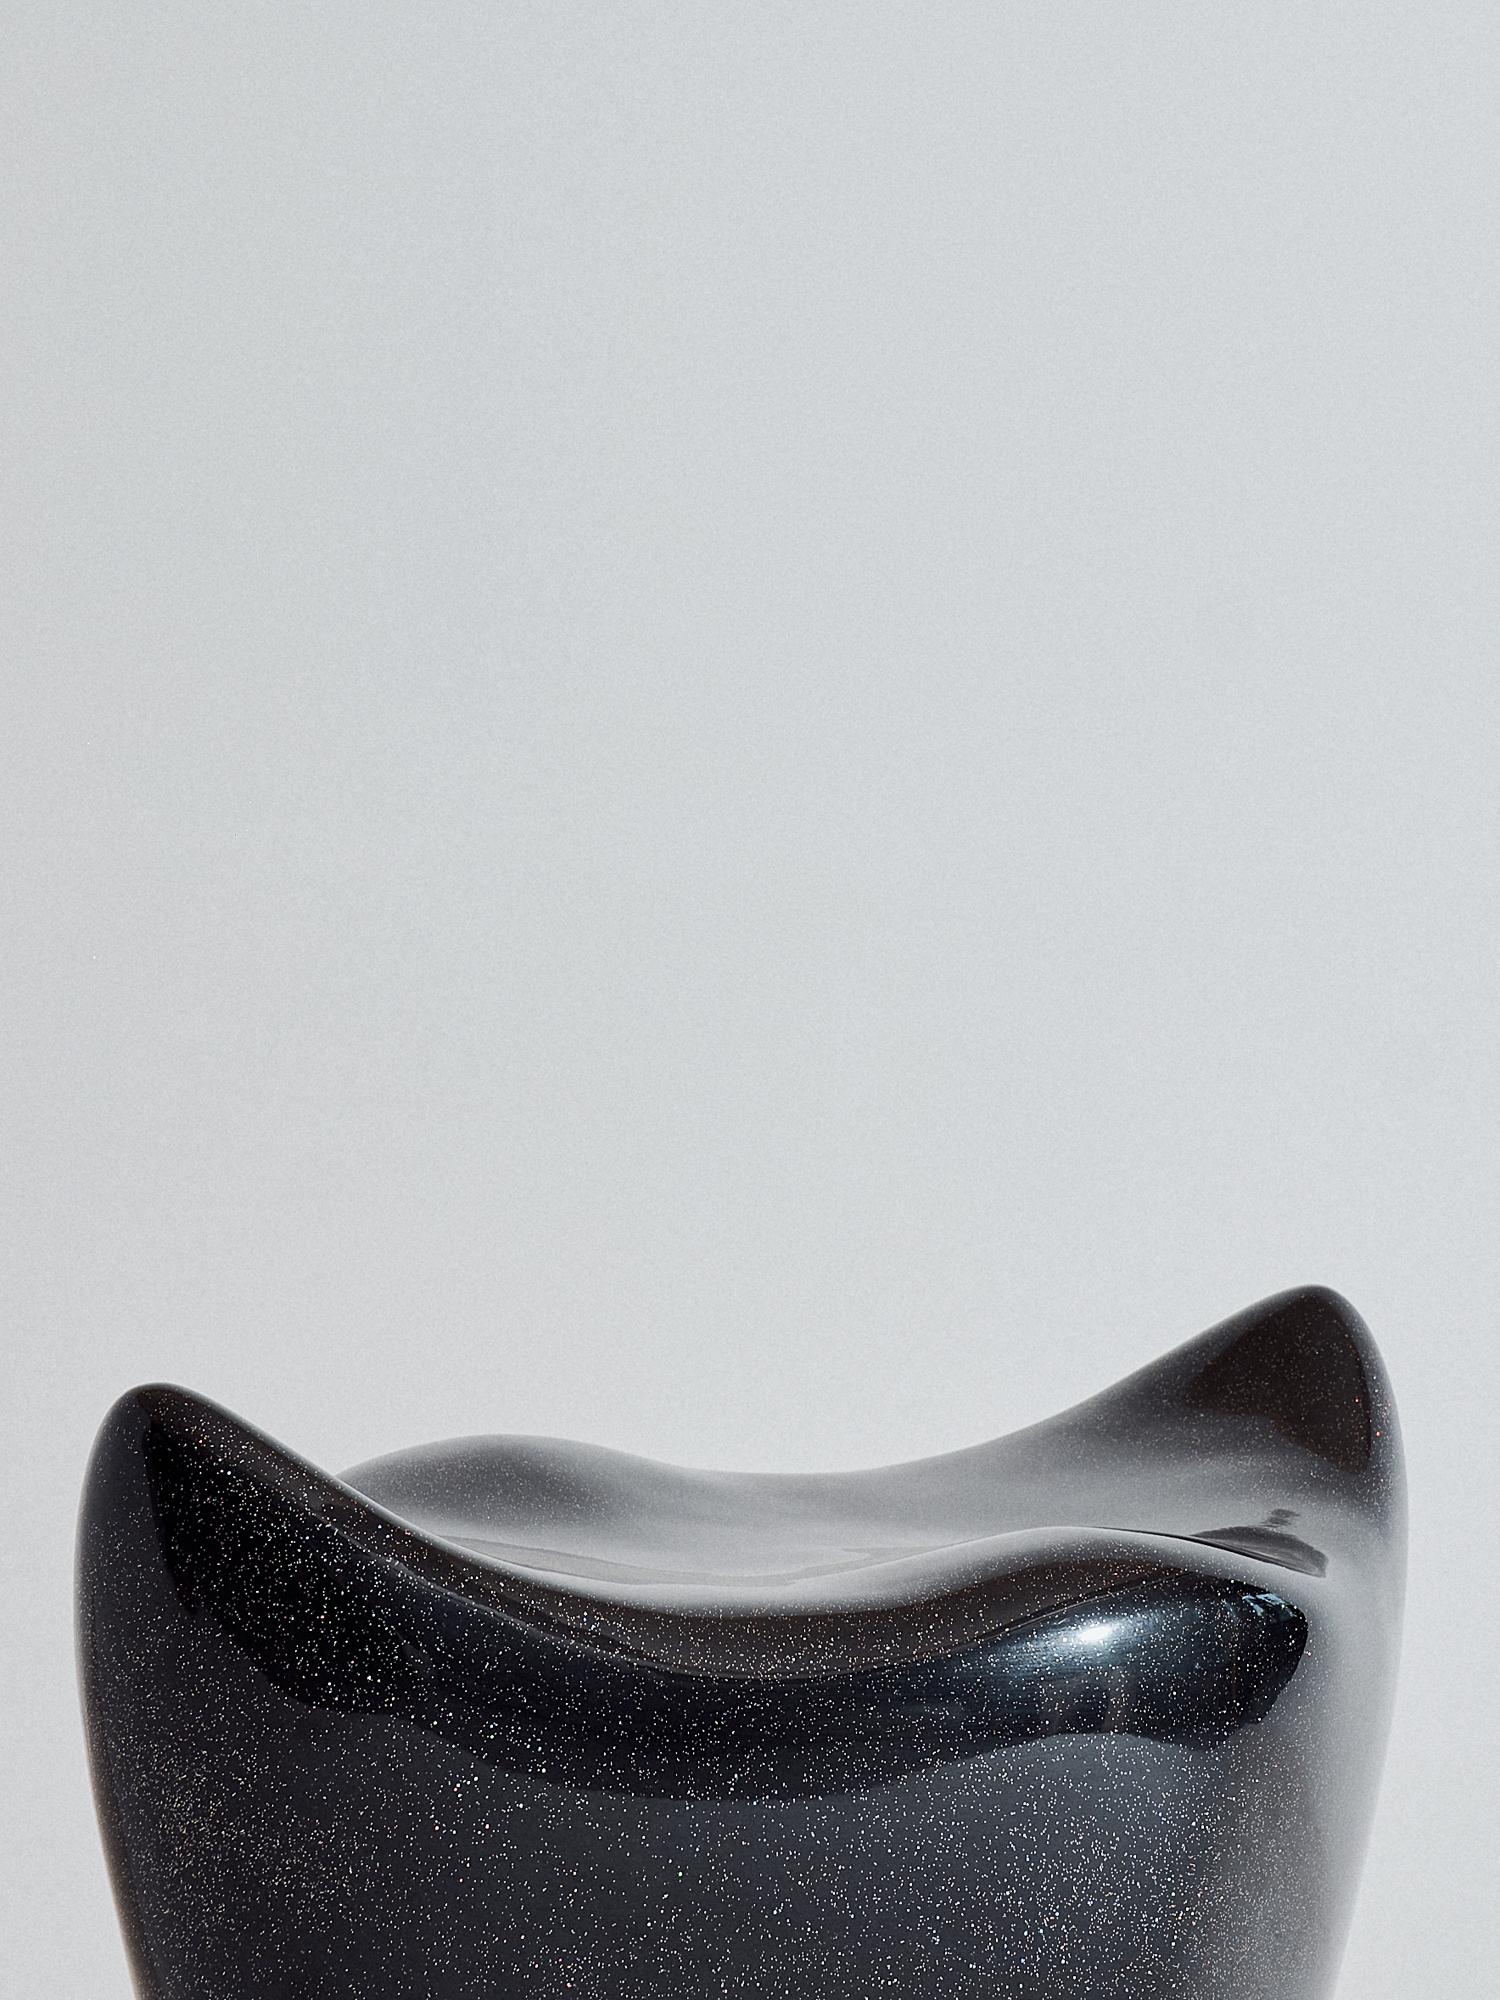 Indian Sculptural Black Galaxy Fiberglass Popcorn Bench by Kunaal Kyhaan For Sale